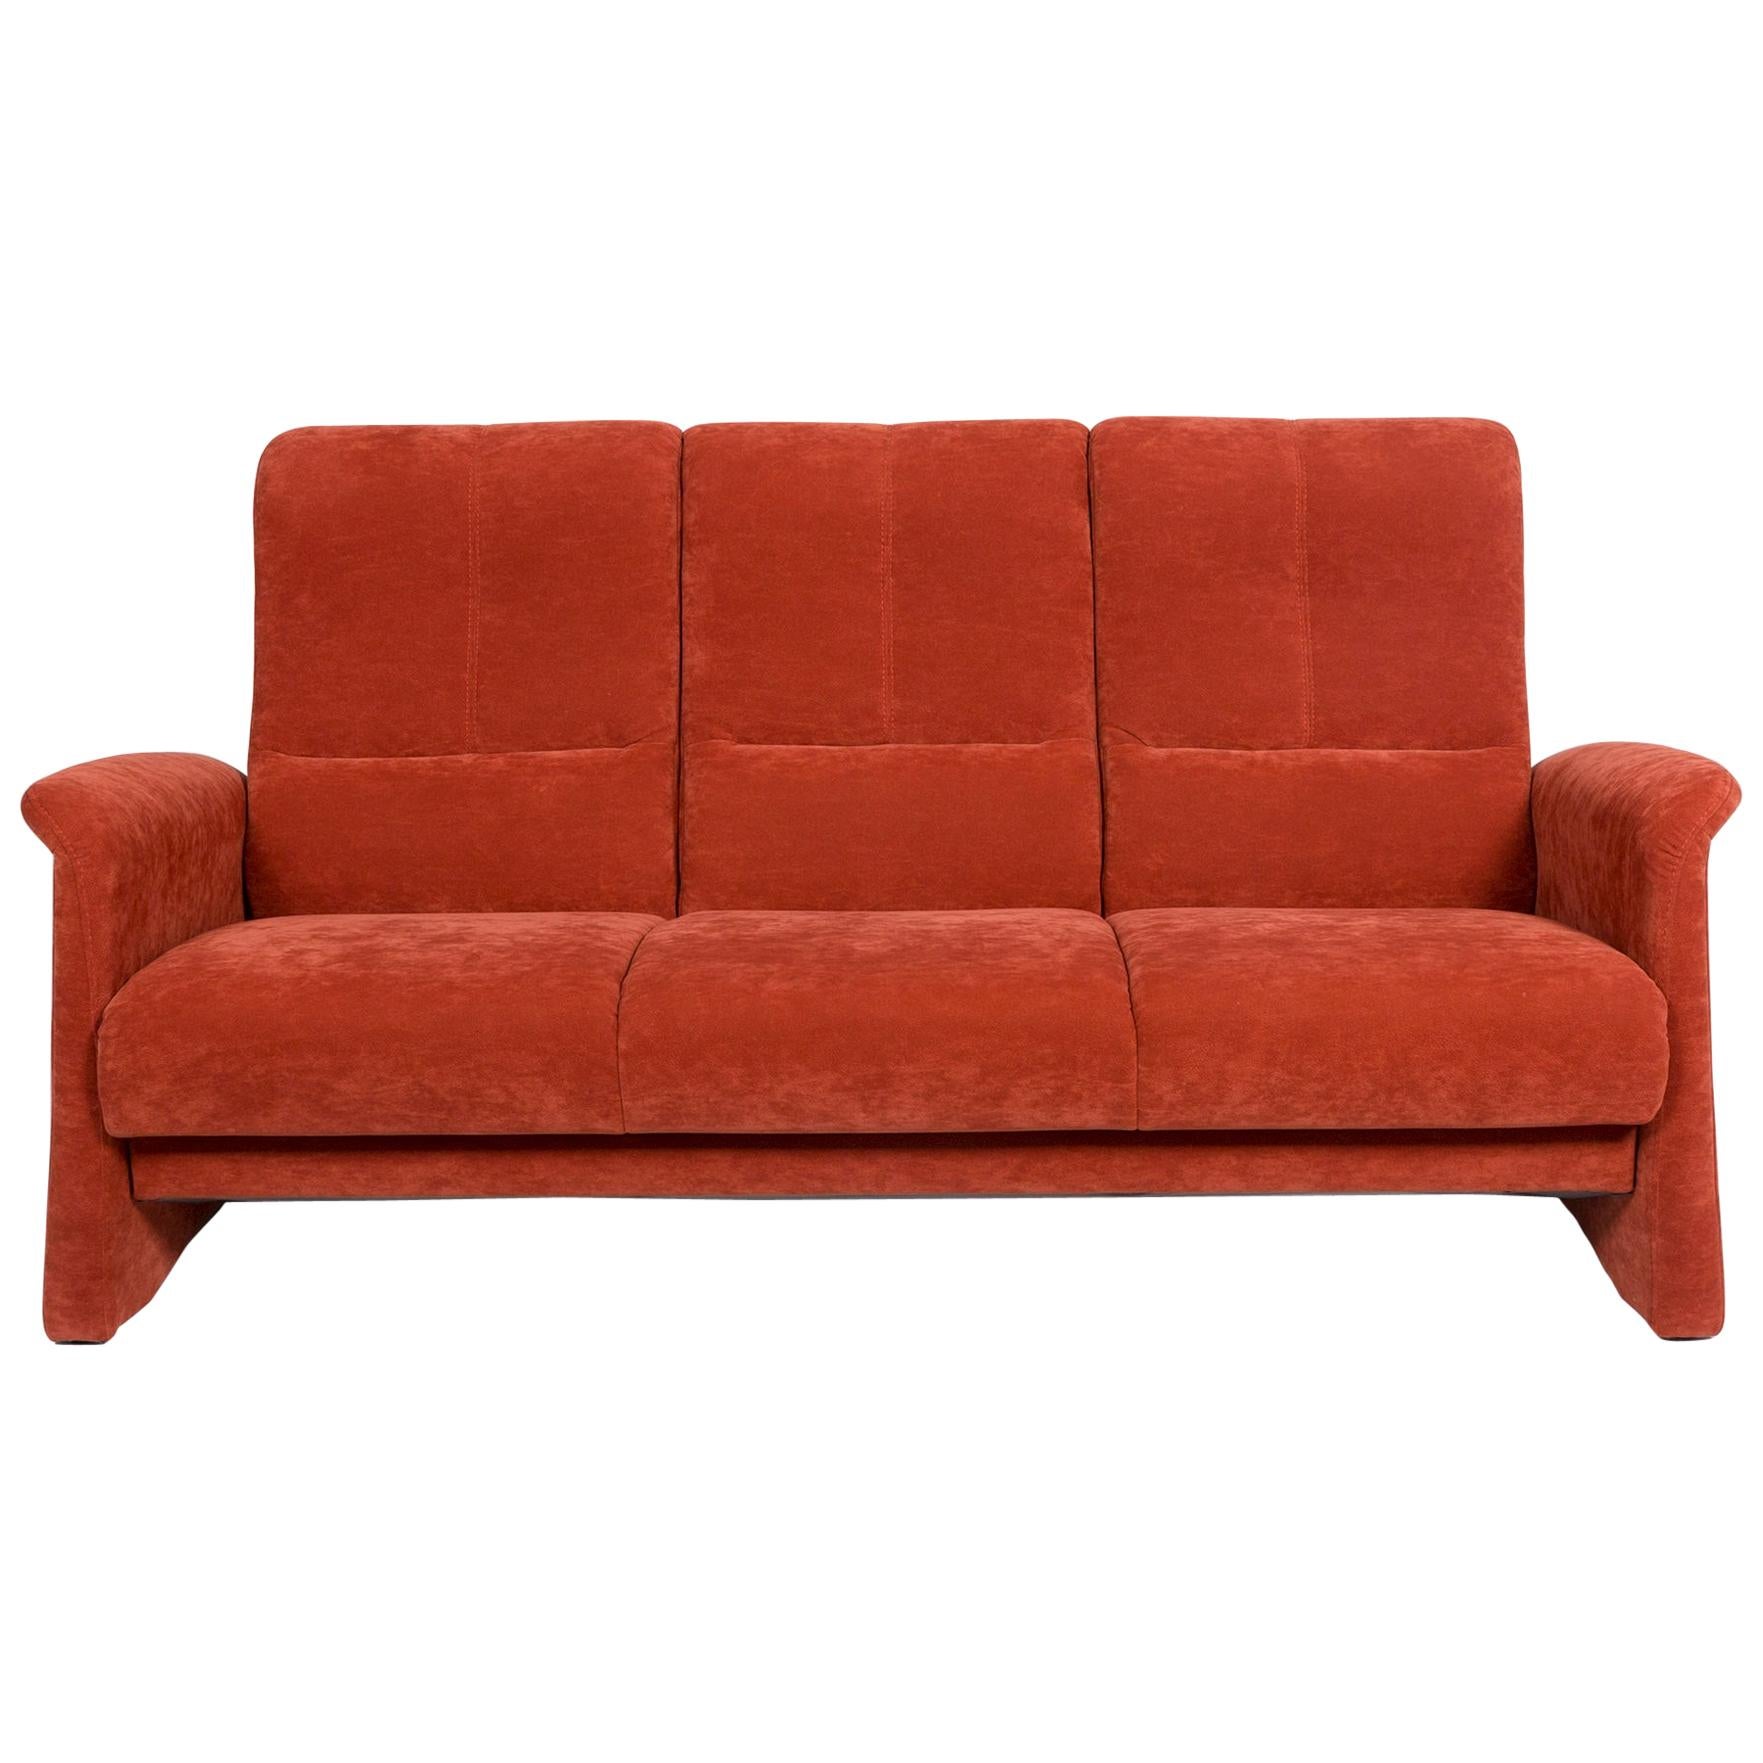 Himolla Fabric Sofa Orange Rust Red Three-Seat Couch